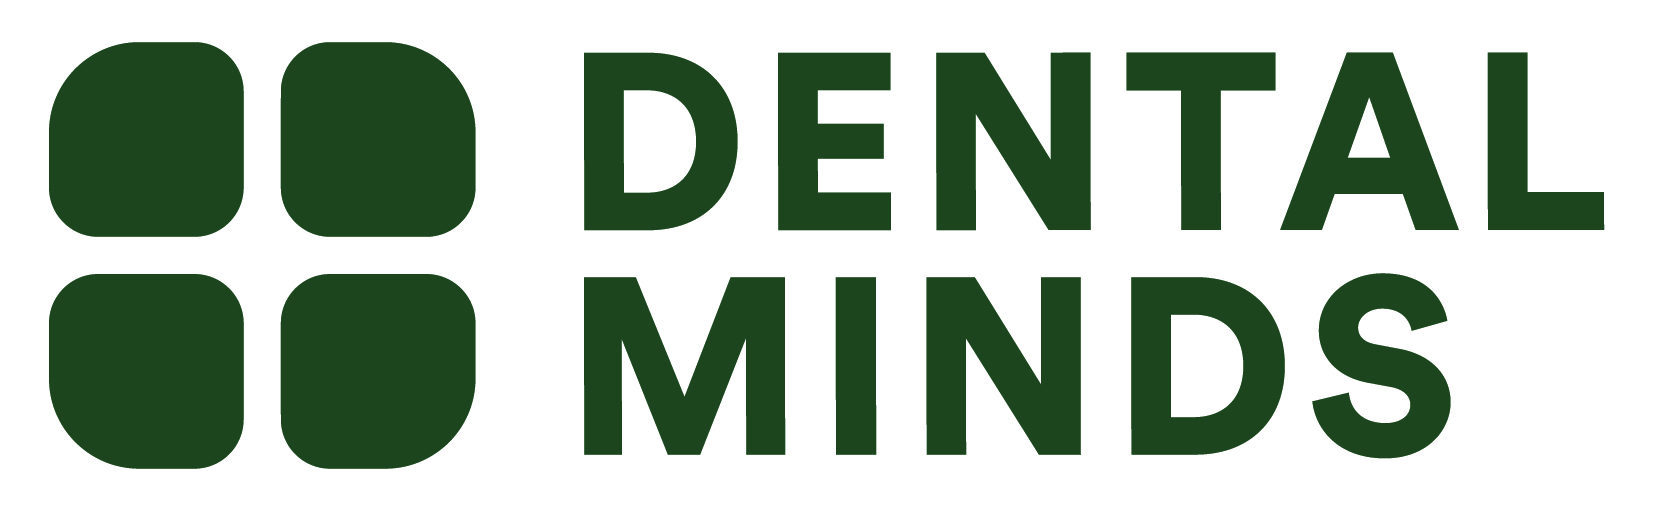 DentalMinds_Logo_Stacked_Green_CMYK